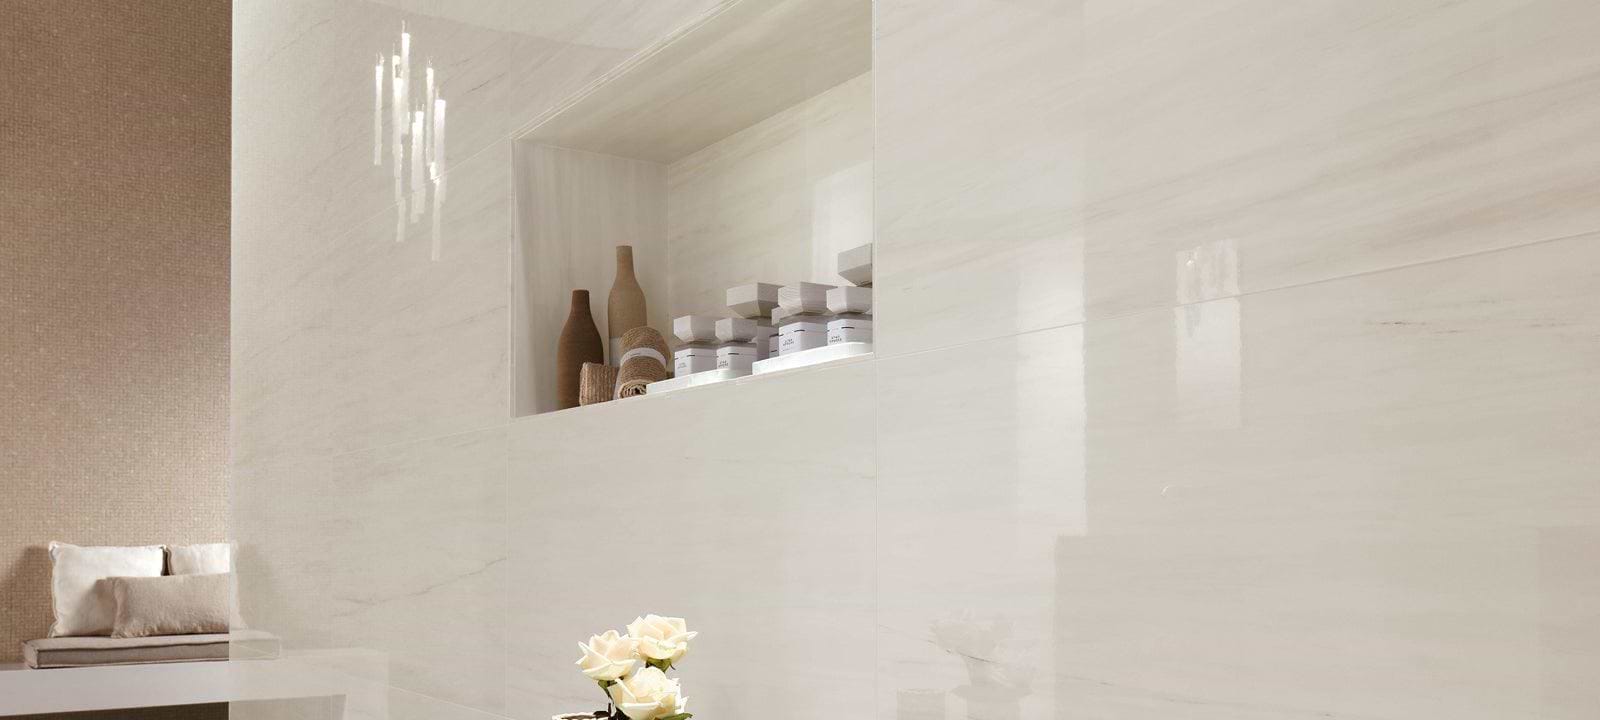 Minoli Wall & Floor Tiles 30 x 60 x 0.9cm Marvel Bianco Dolomite Lappato 30 x 60cm